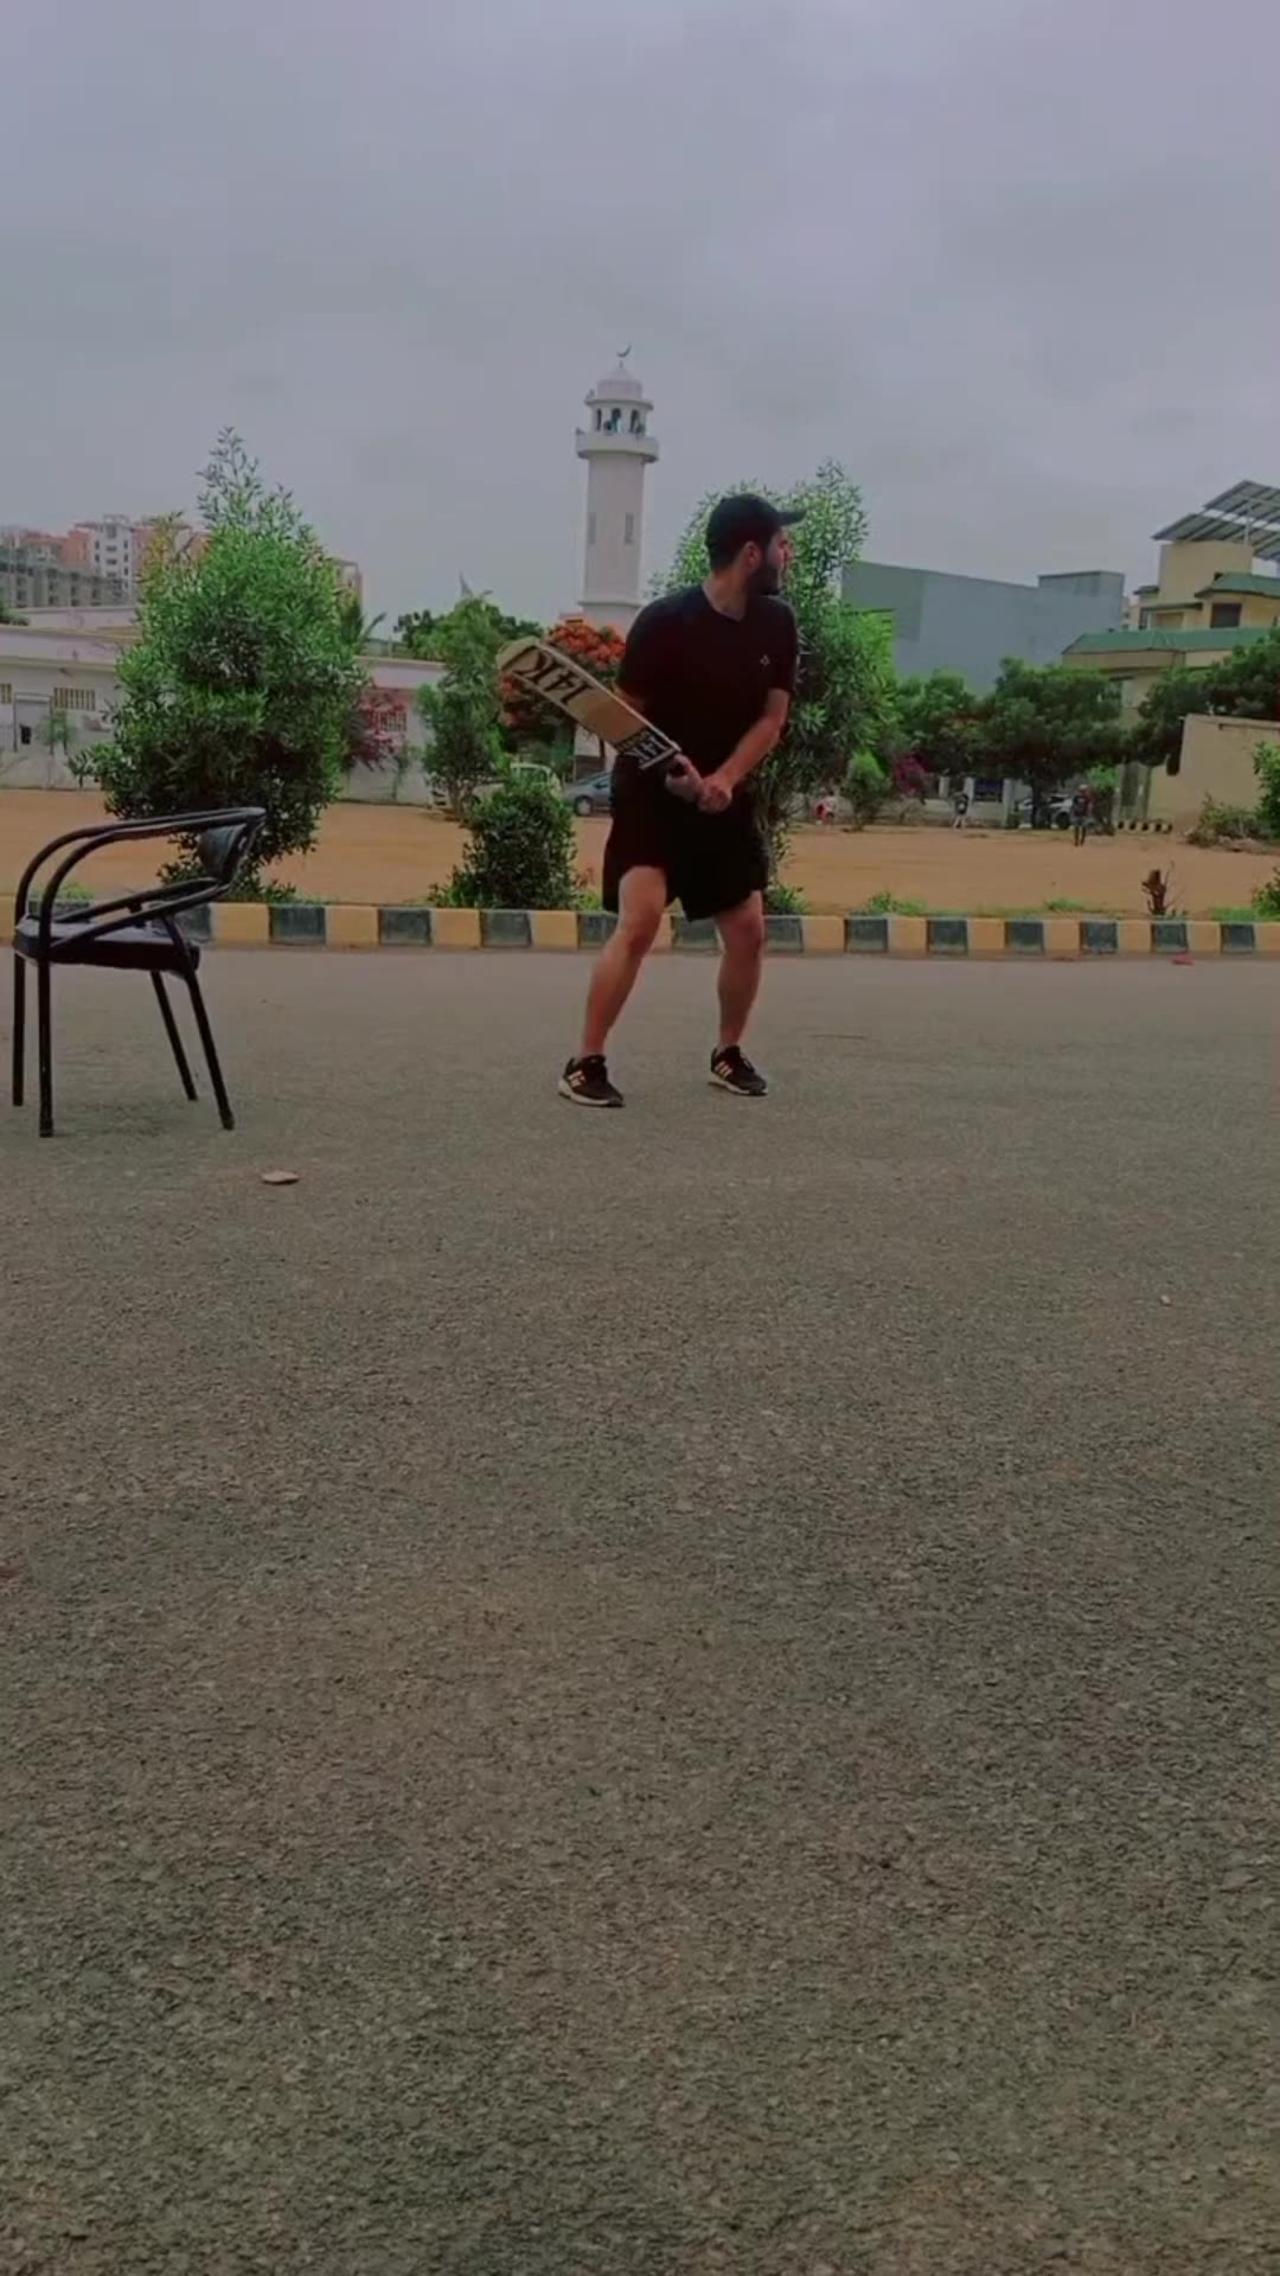 Cricket video